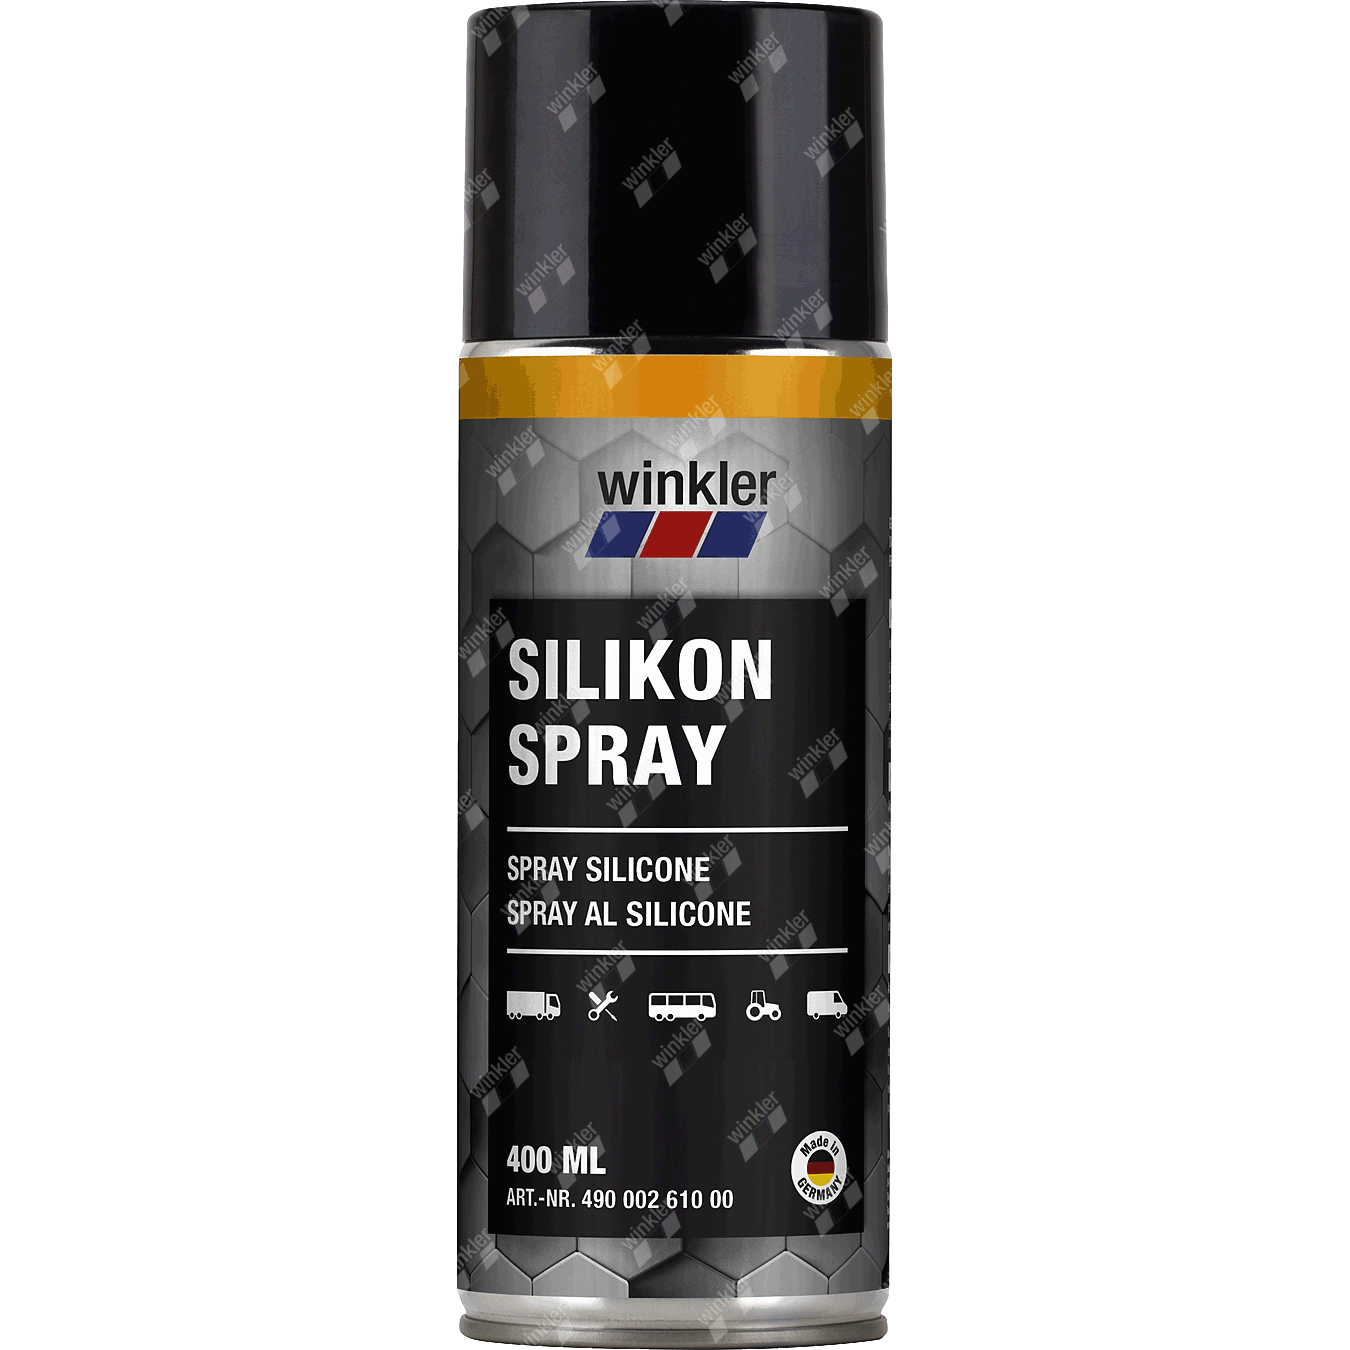 winkler shop - Silicone spray, 400ml